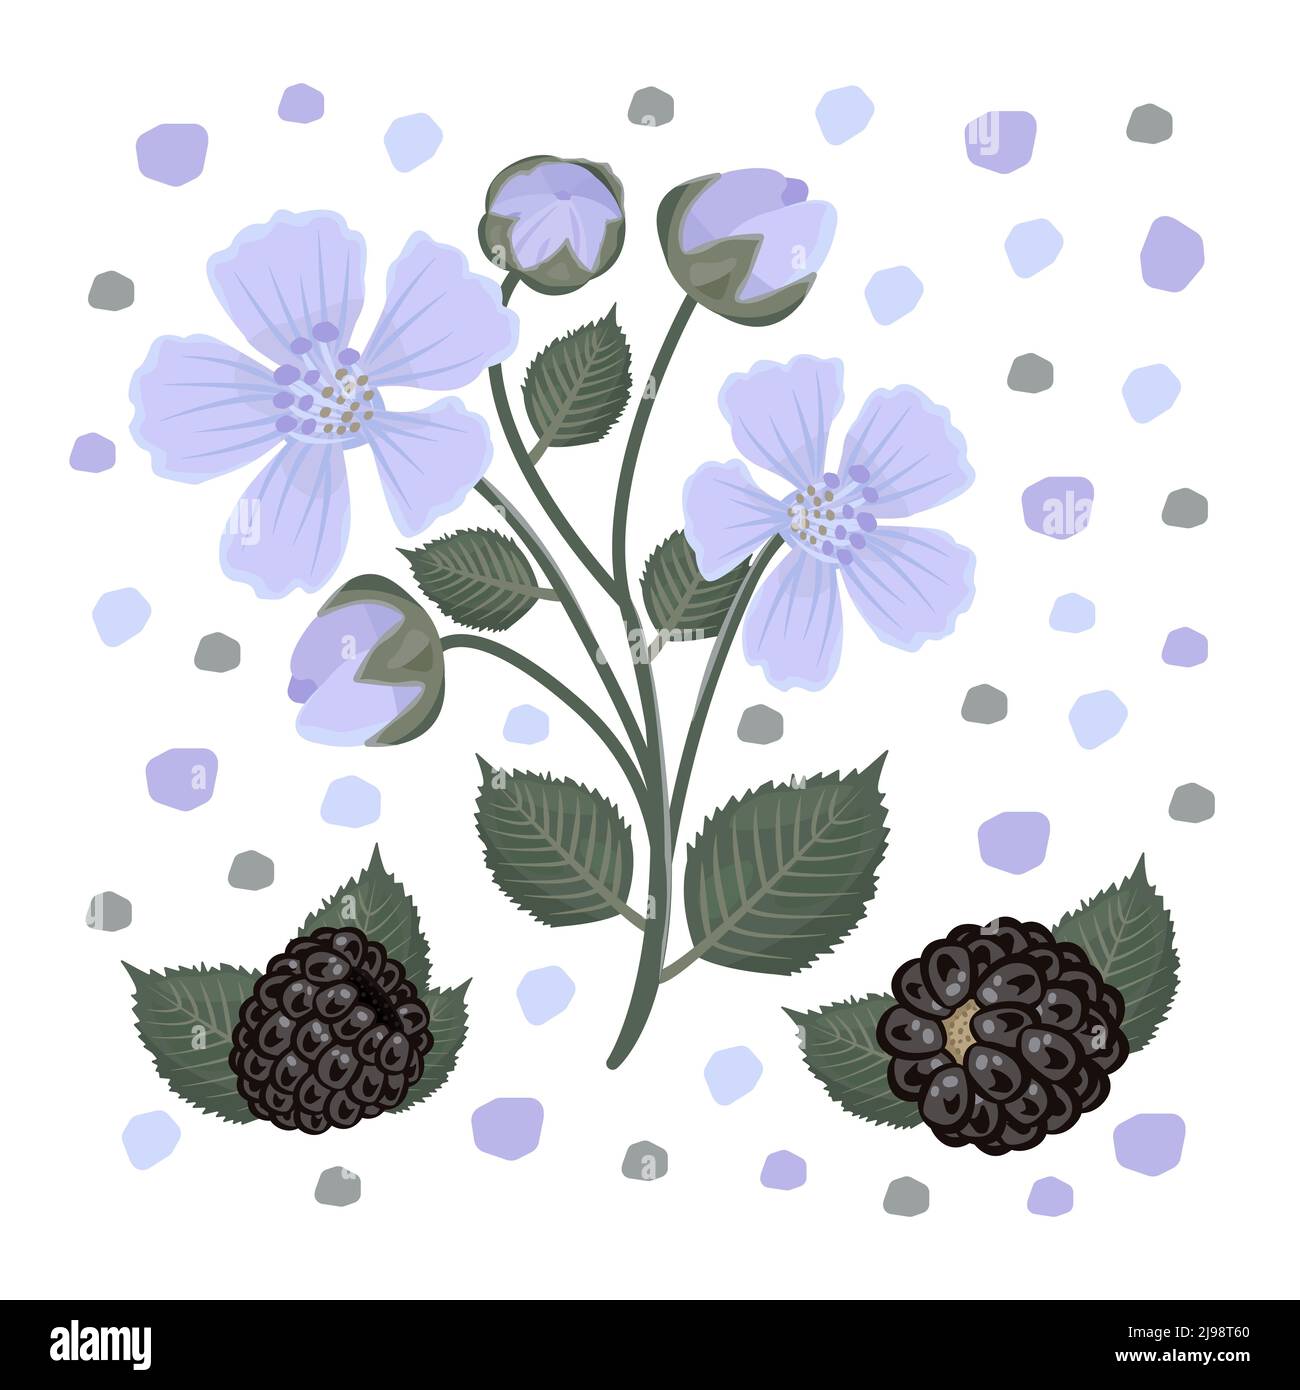 Blackberry flowers and berries, illustration Stock Vector